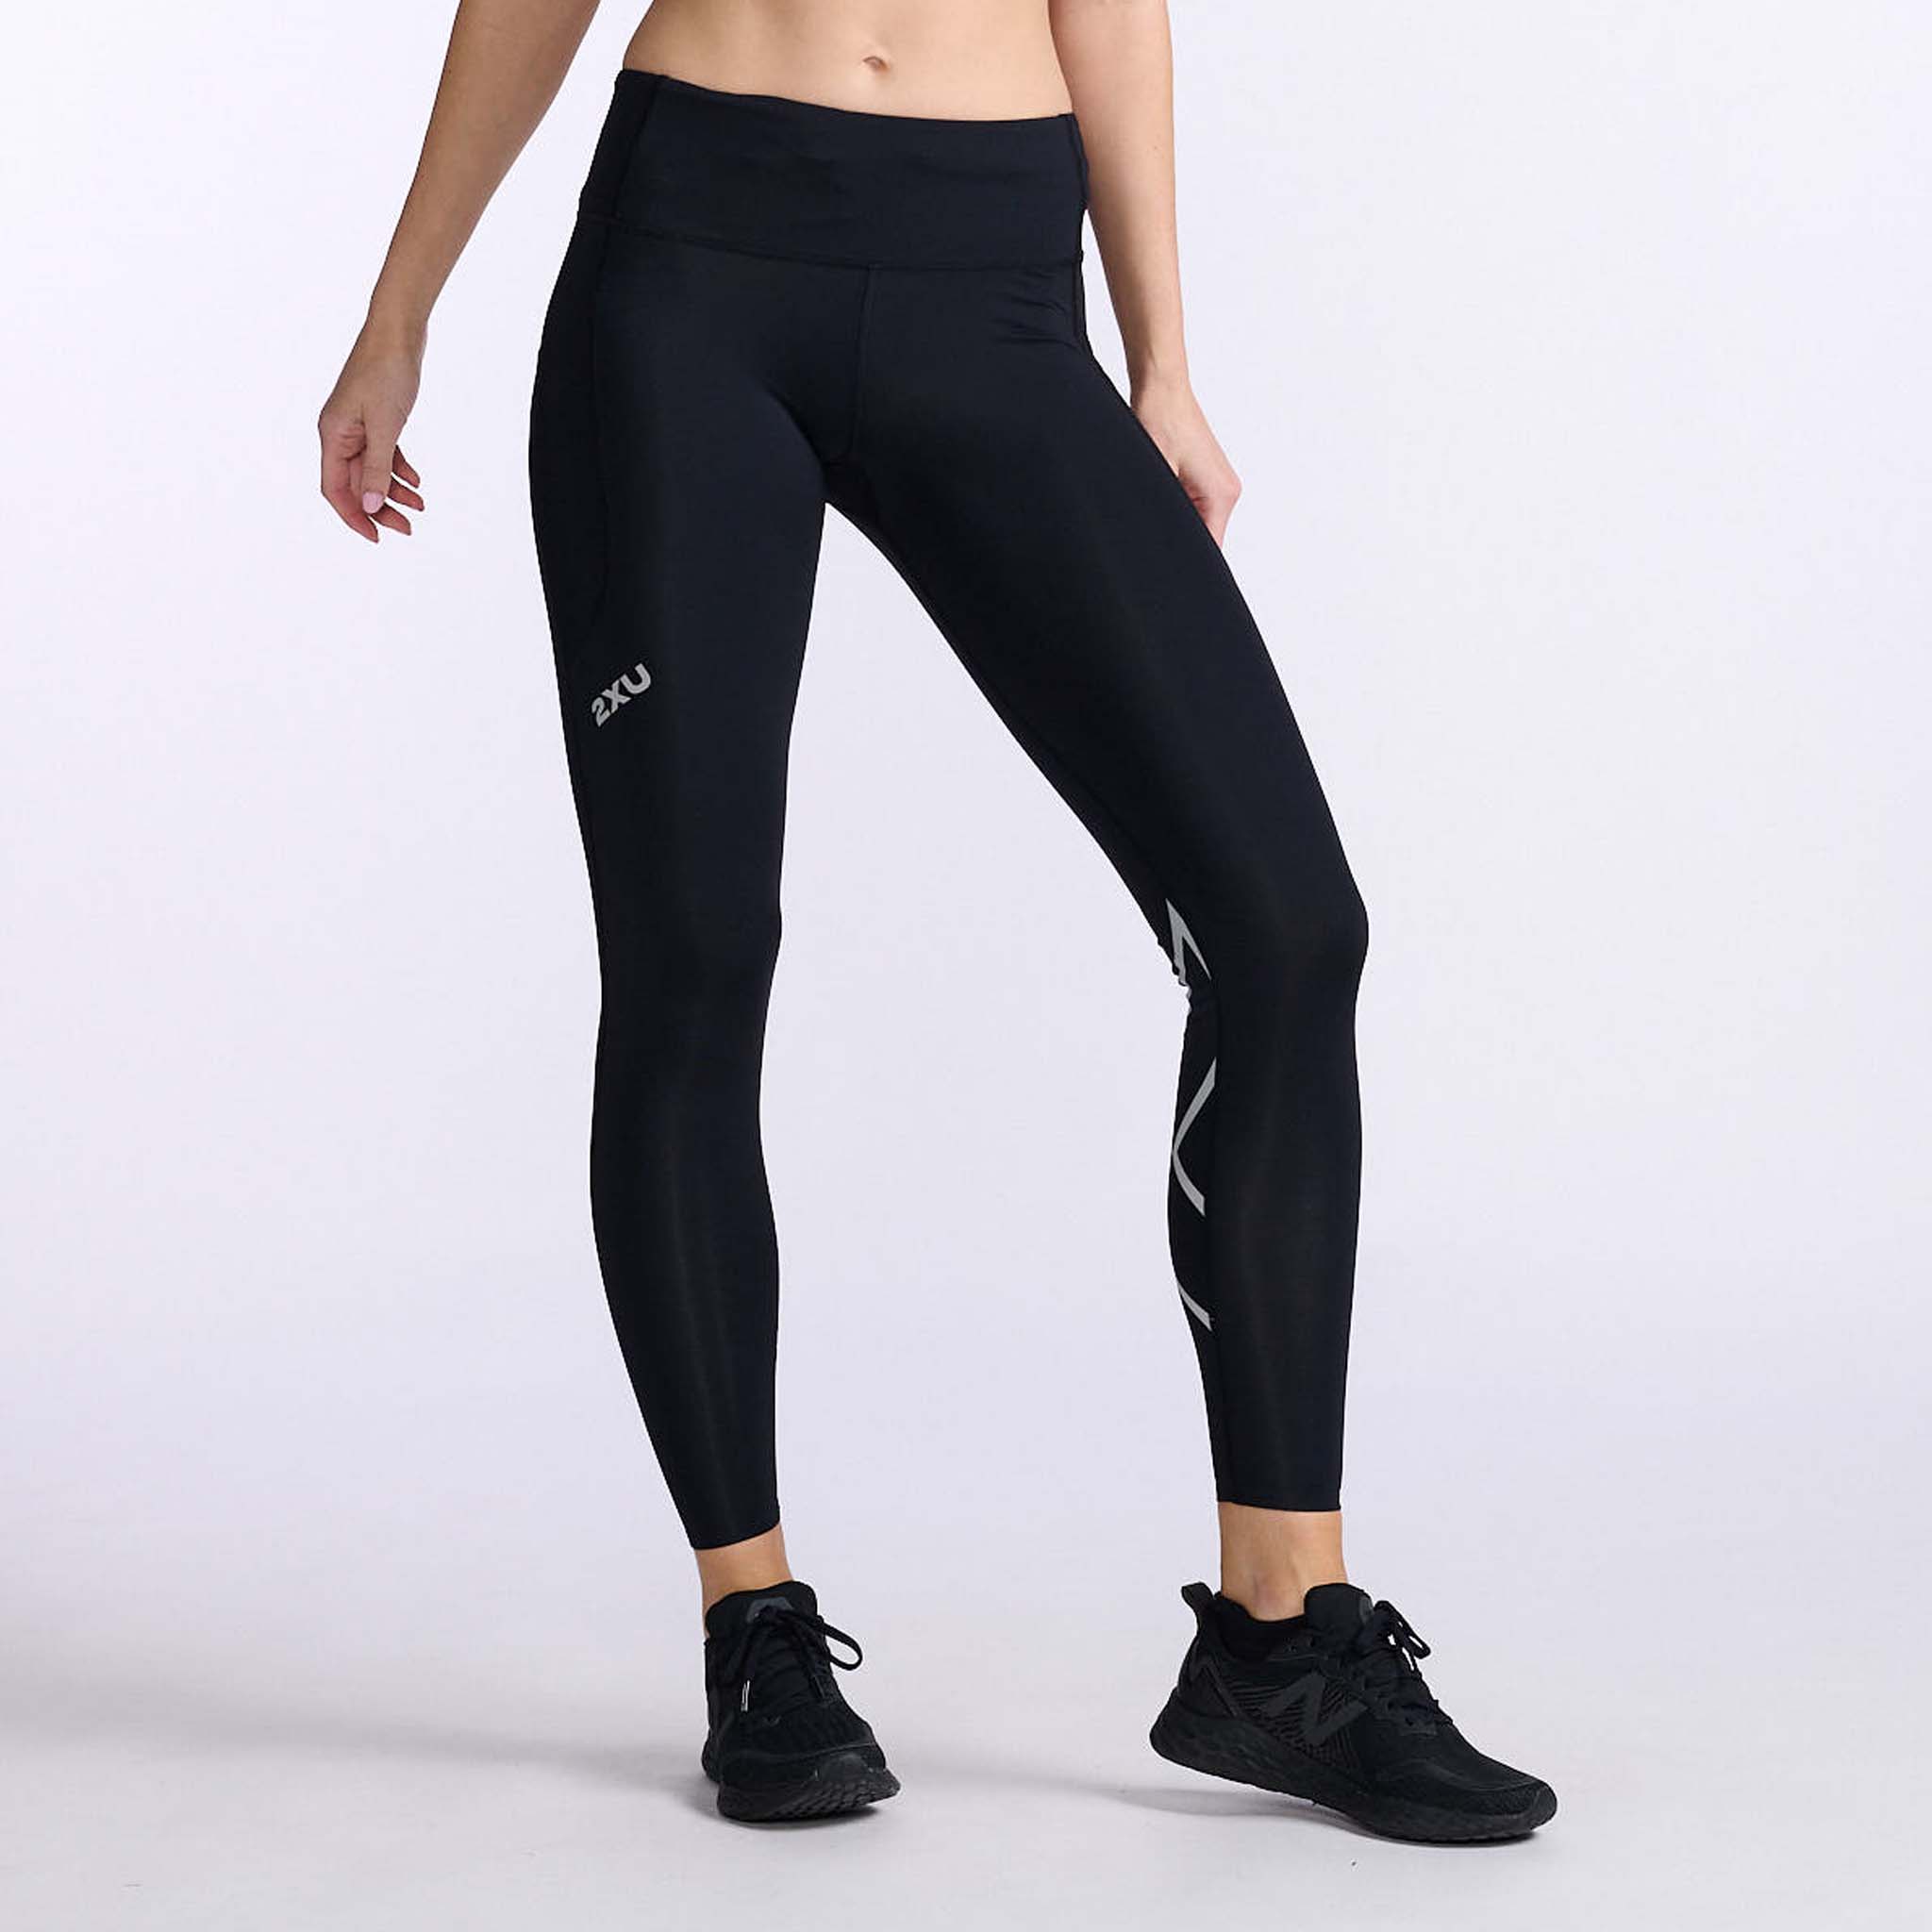 2XU Compression Tights Women's Mid-Rise Workout Pants, Black, Large,  WA2864b